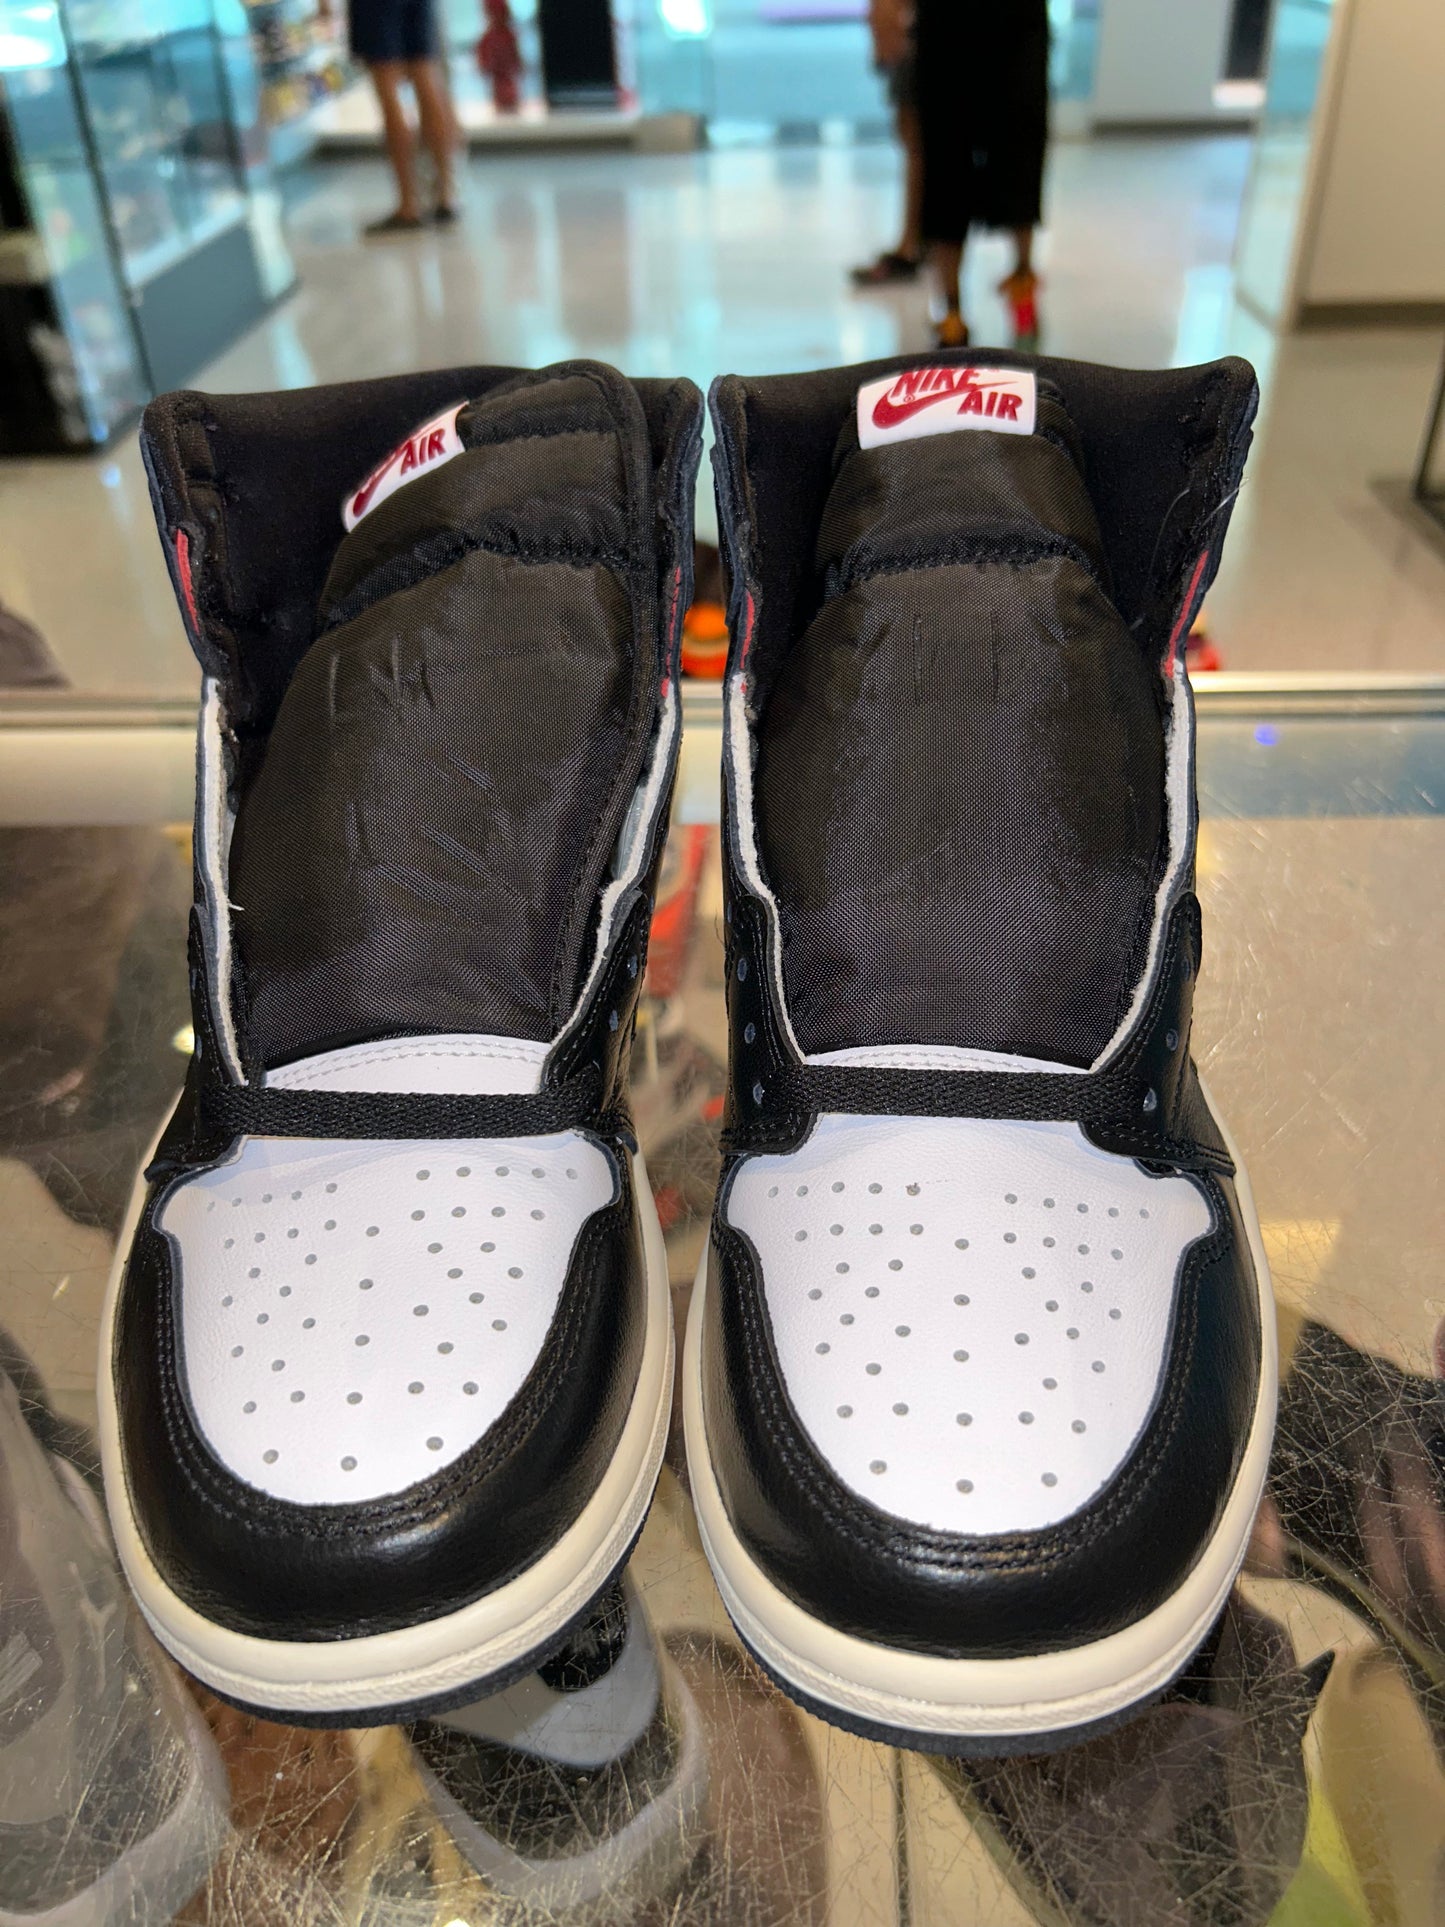 Size 9 Air Jordan 1 “Gym Red” Brand New (Mall)